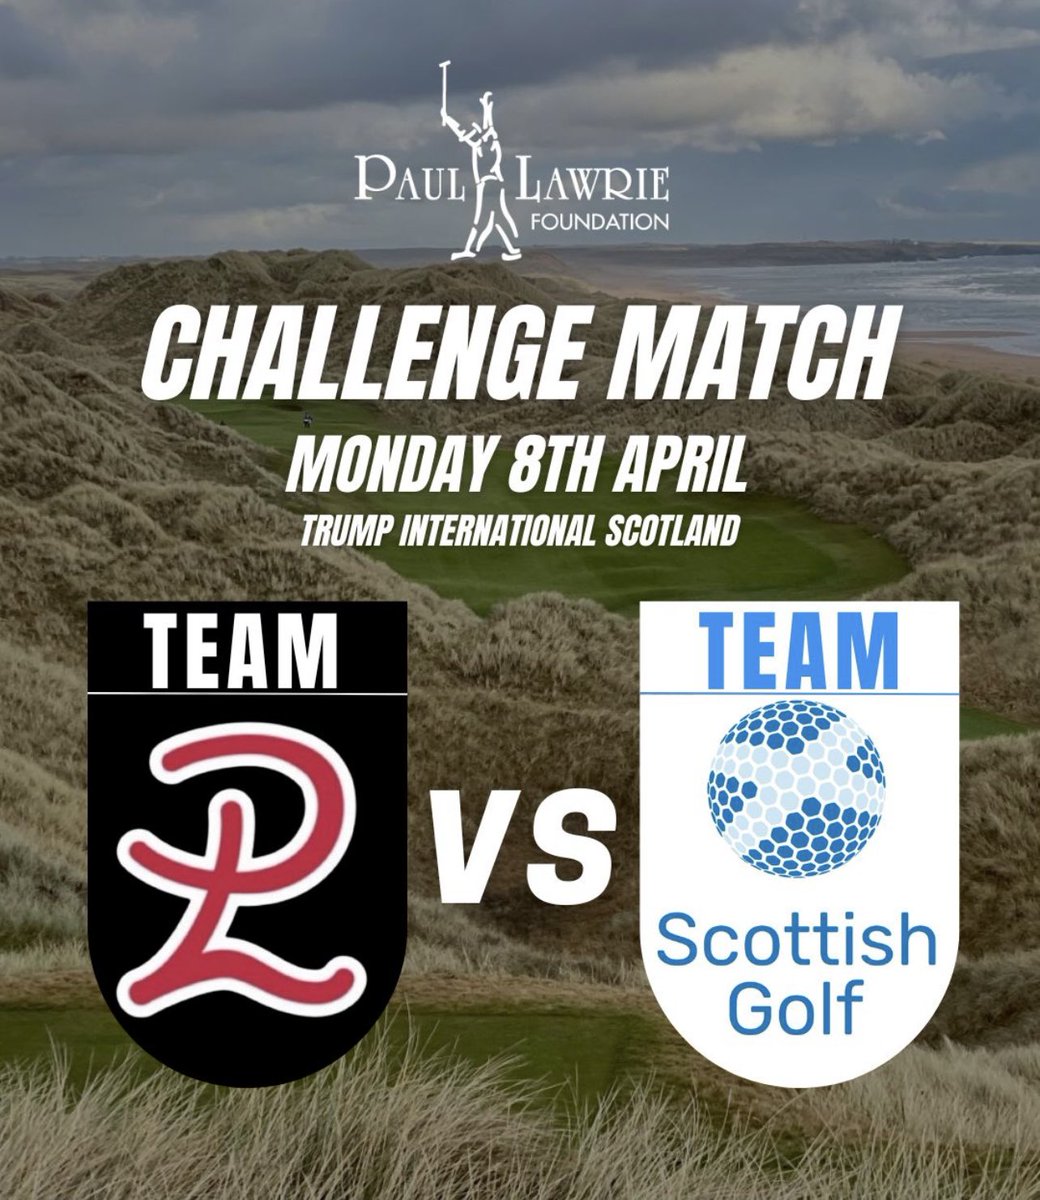 Paul Lawrie Foundation Challenge Match 🏆 🏌️‍♂️ 8 Professionals vs 8 Elite Amateurs ⛳️ @TrumpScotland 📆 Monday 8th April Teams will be announced tomorrow 👀